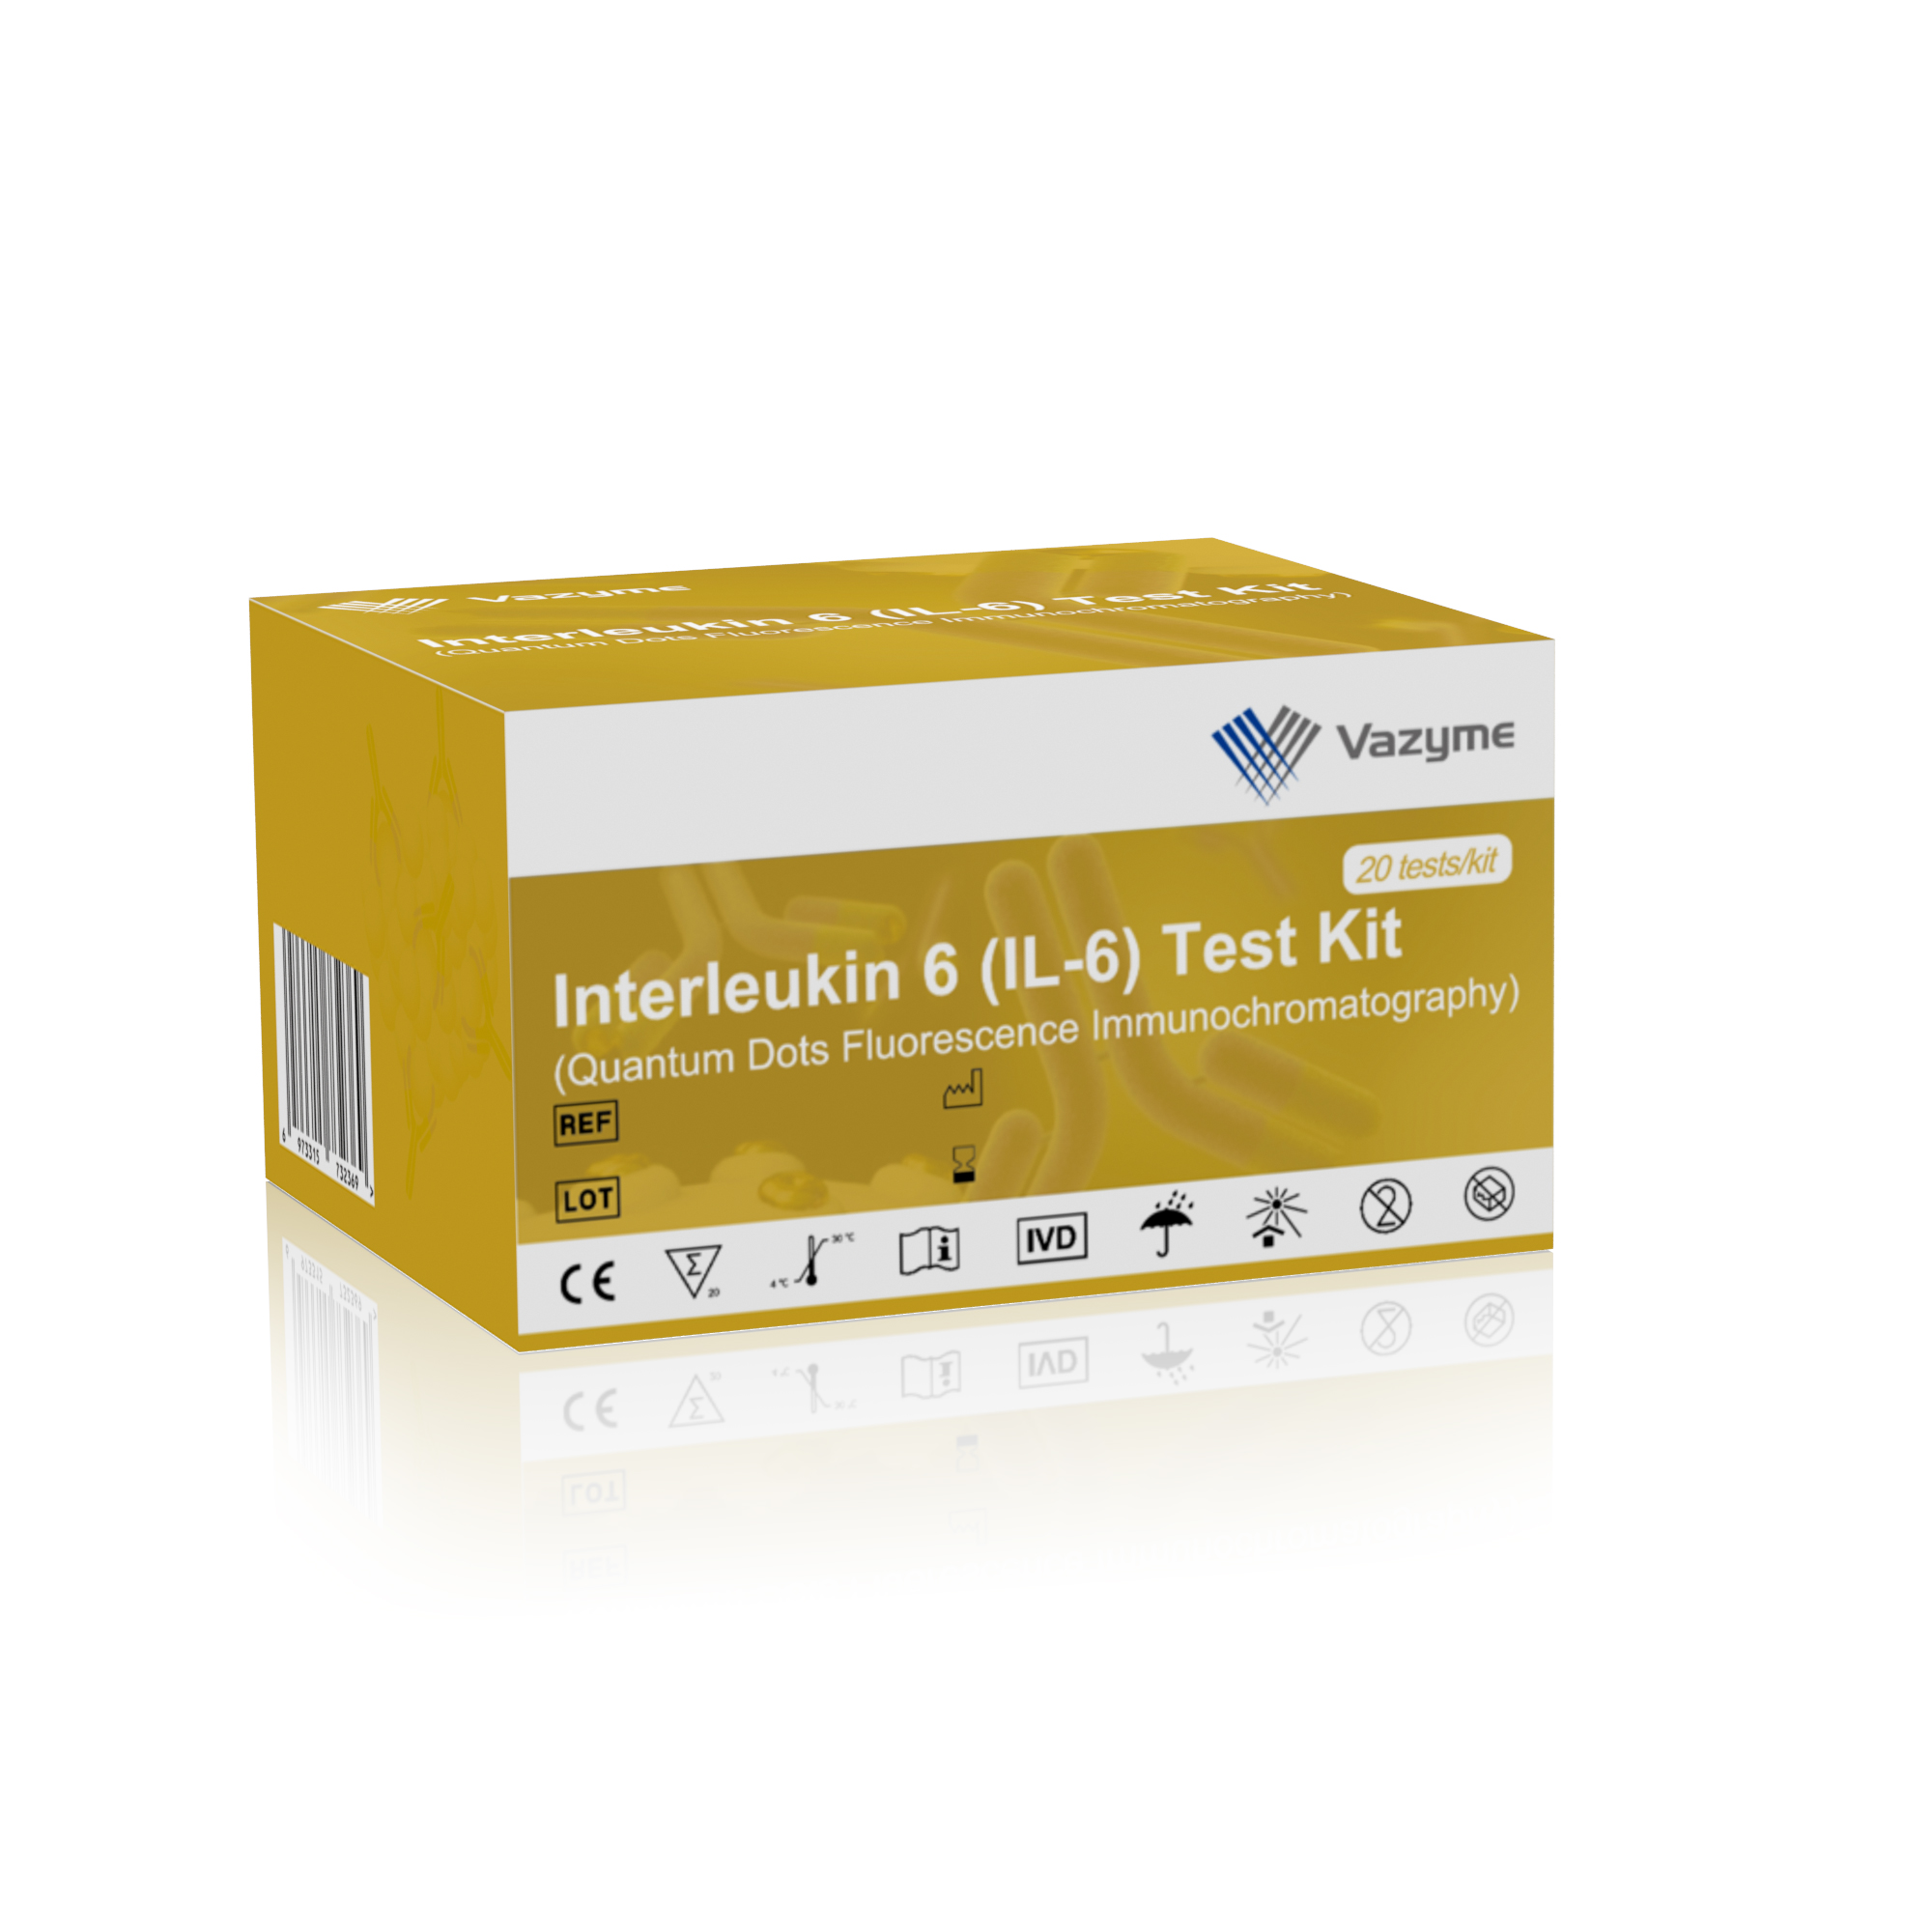 Interleukin 6 (IL-6) Test Kit (Quantum Dots Fluorescence Immunochromatography)